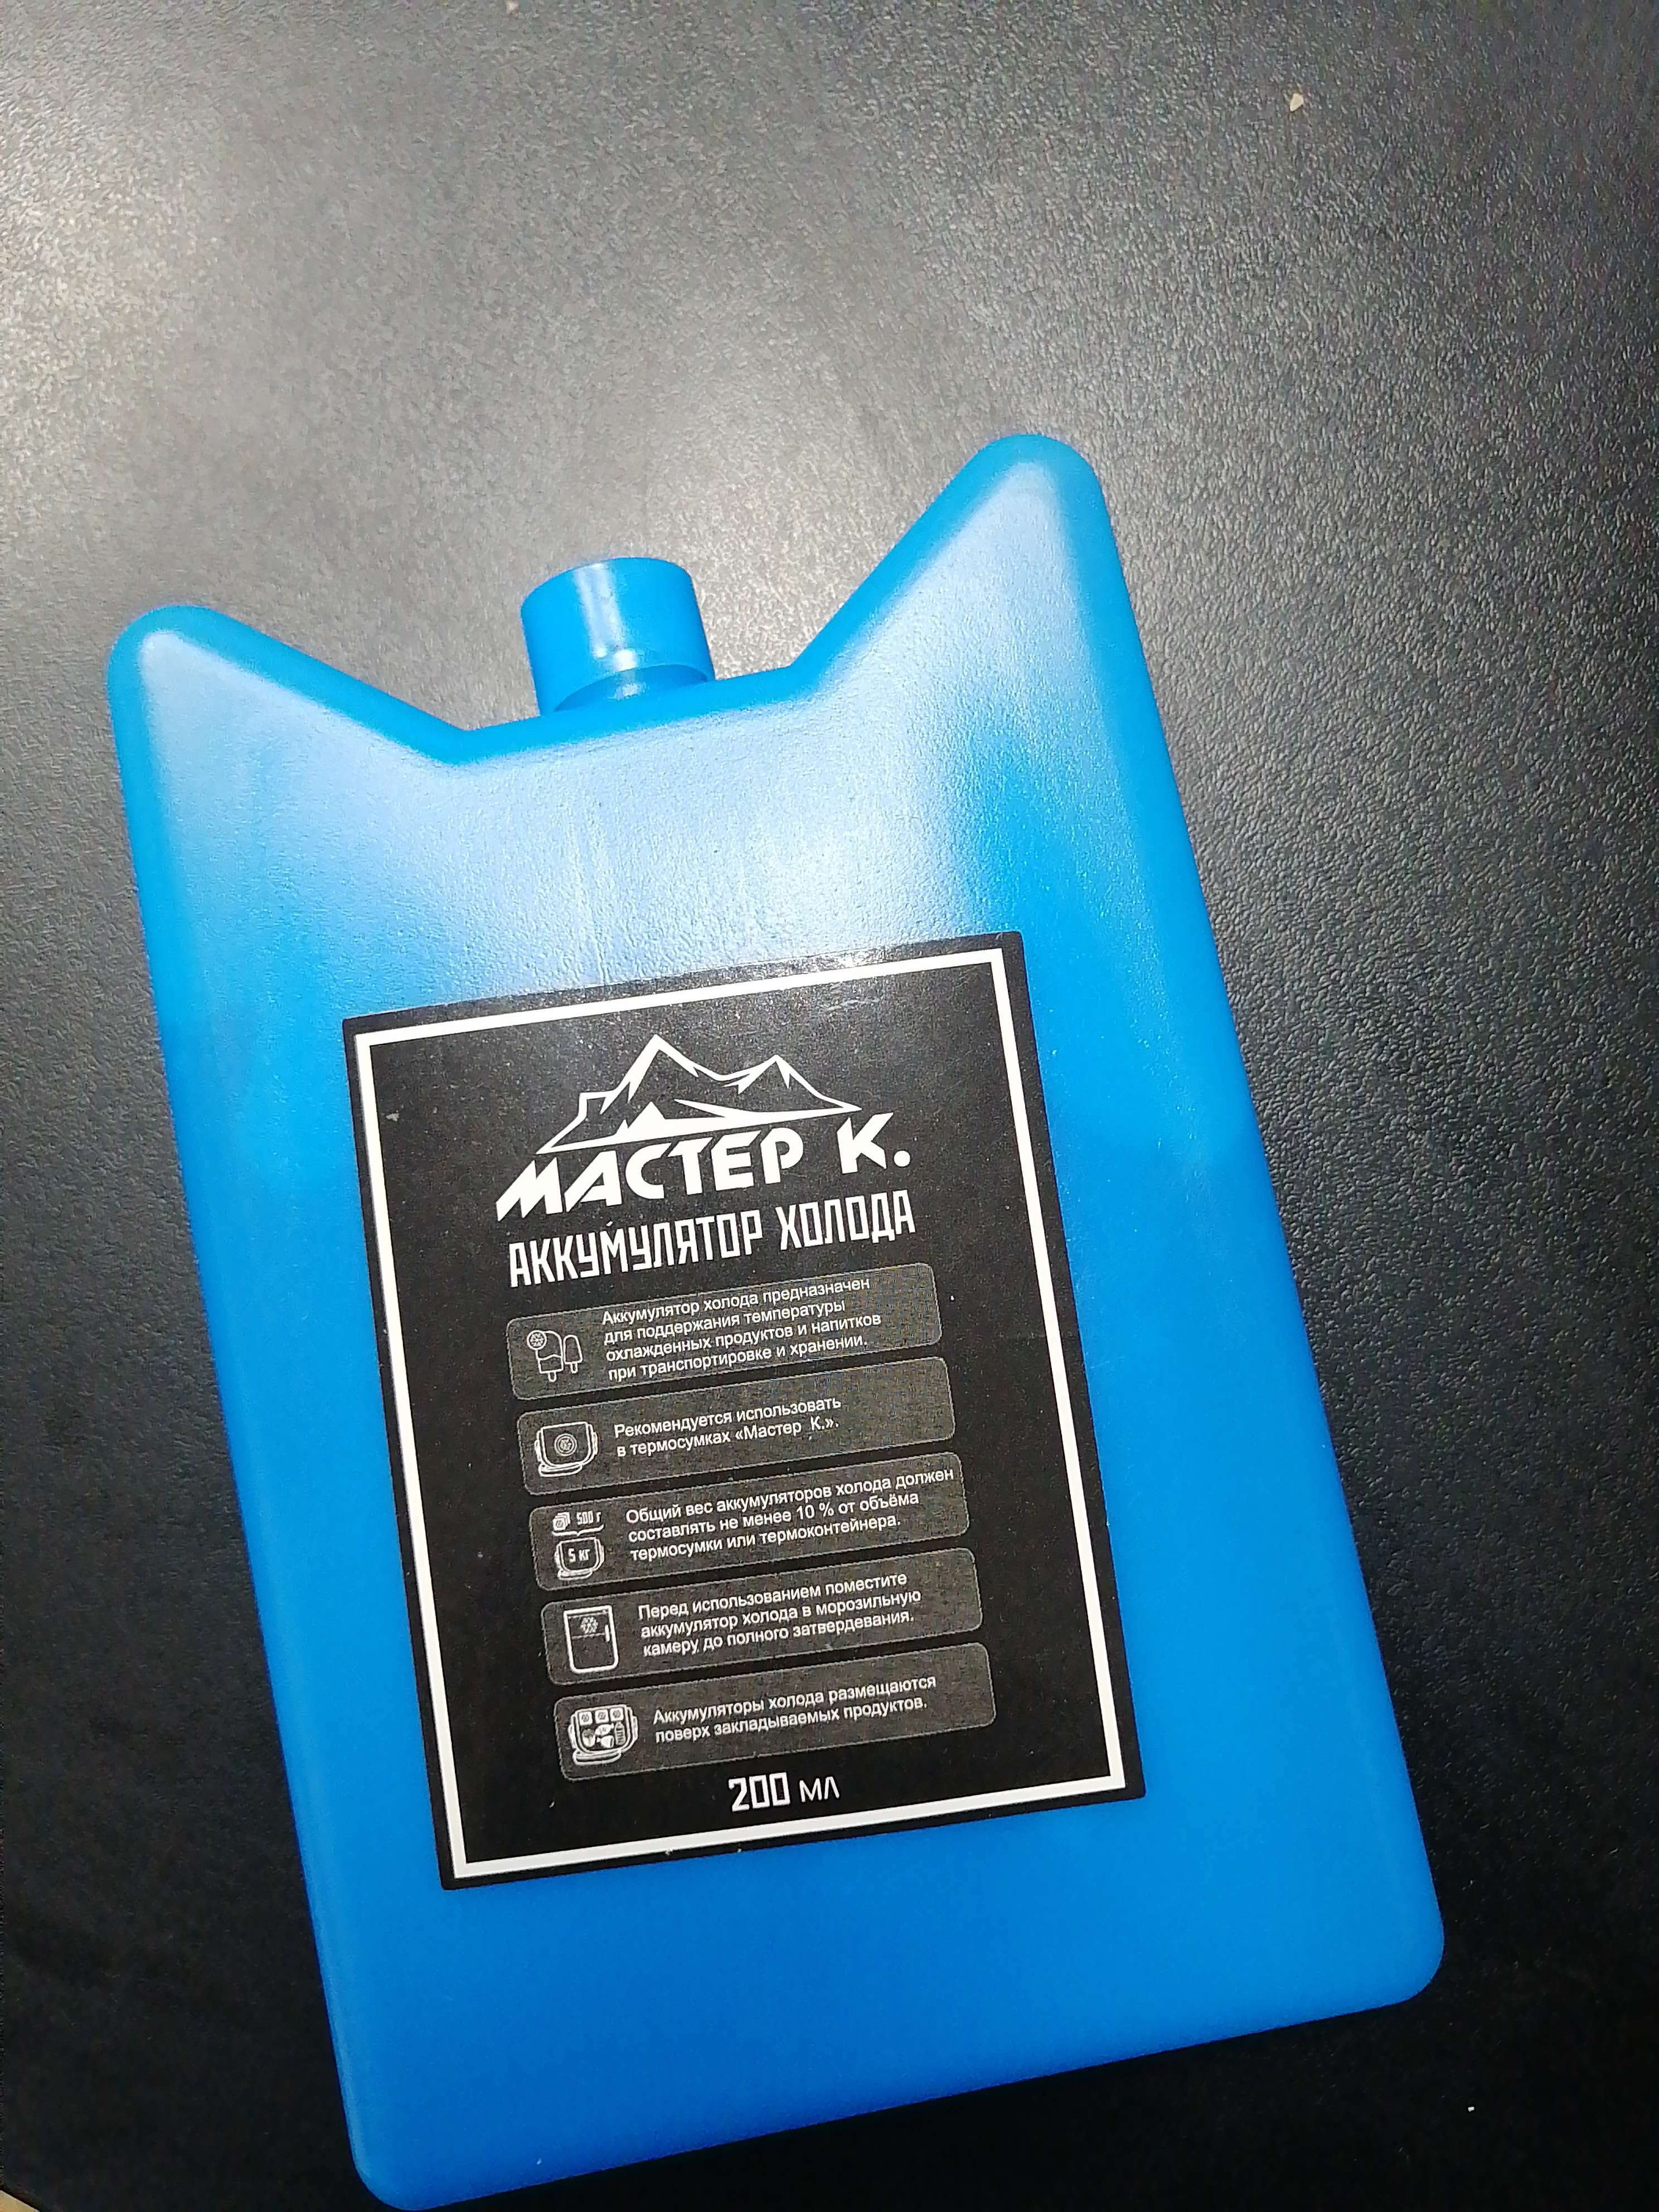 Фотография покупателя товара Аккумулятор холода "Мастер К", 200 мл, 14.5 х 10 х 2 см